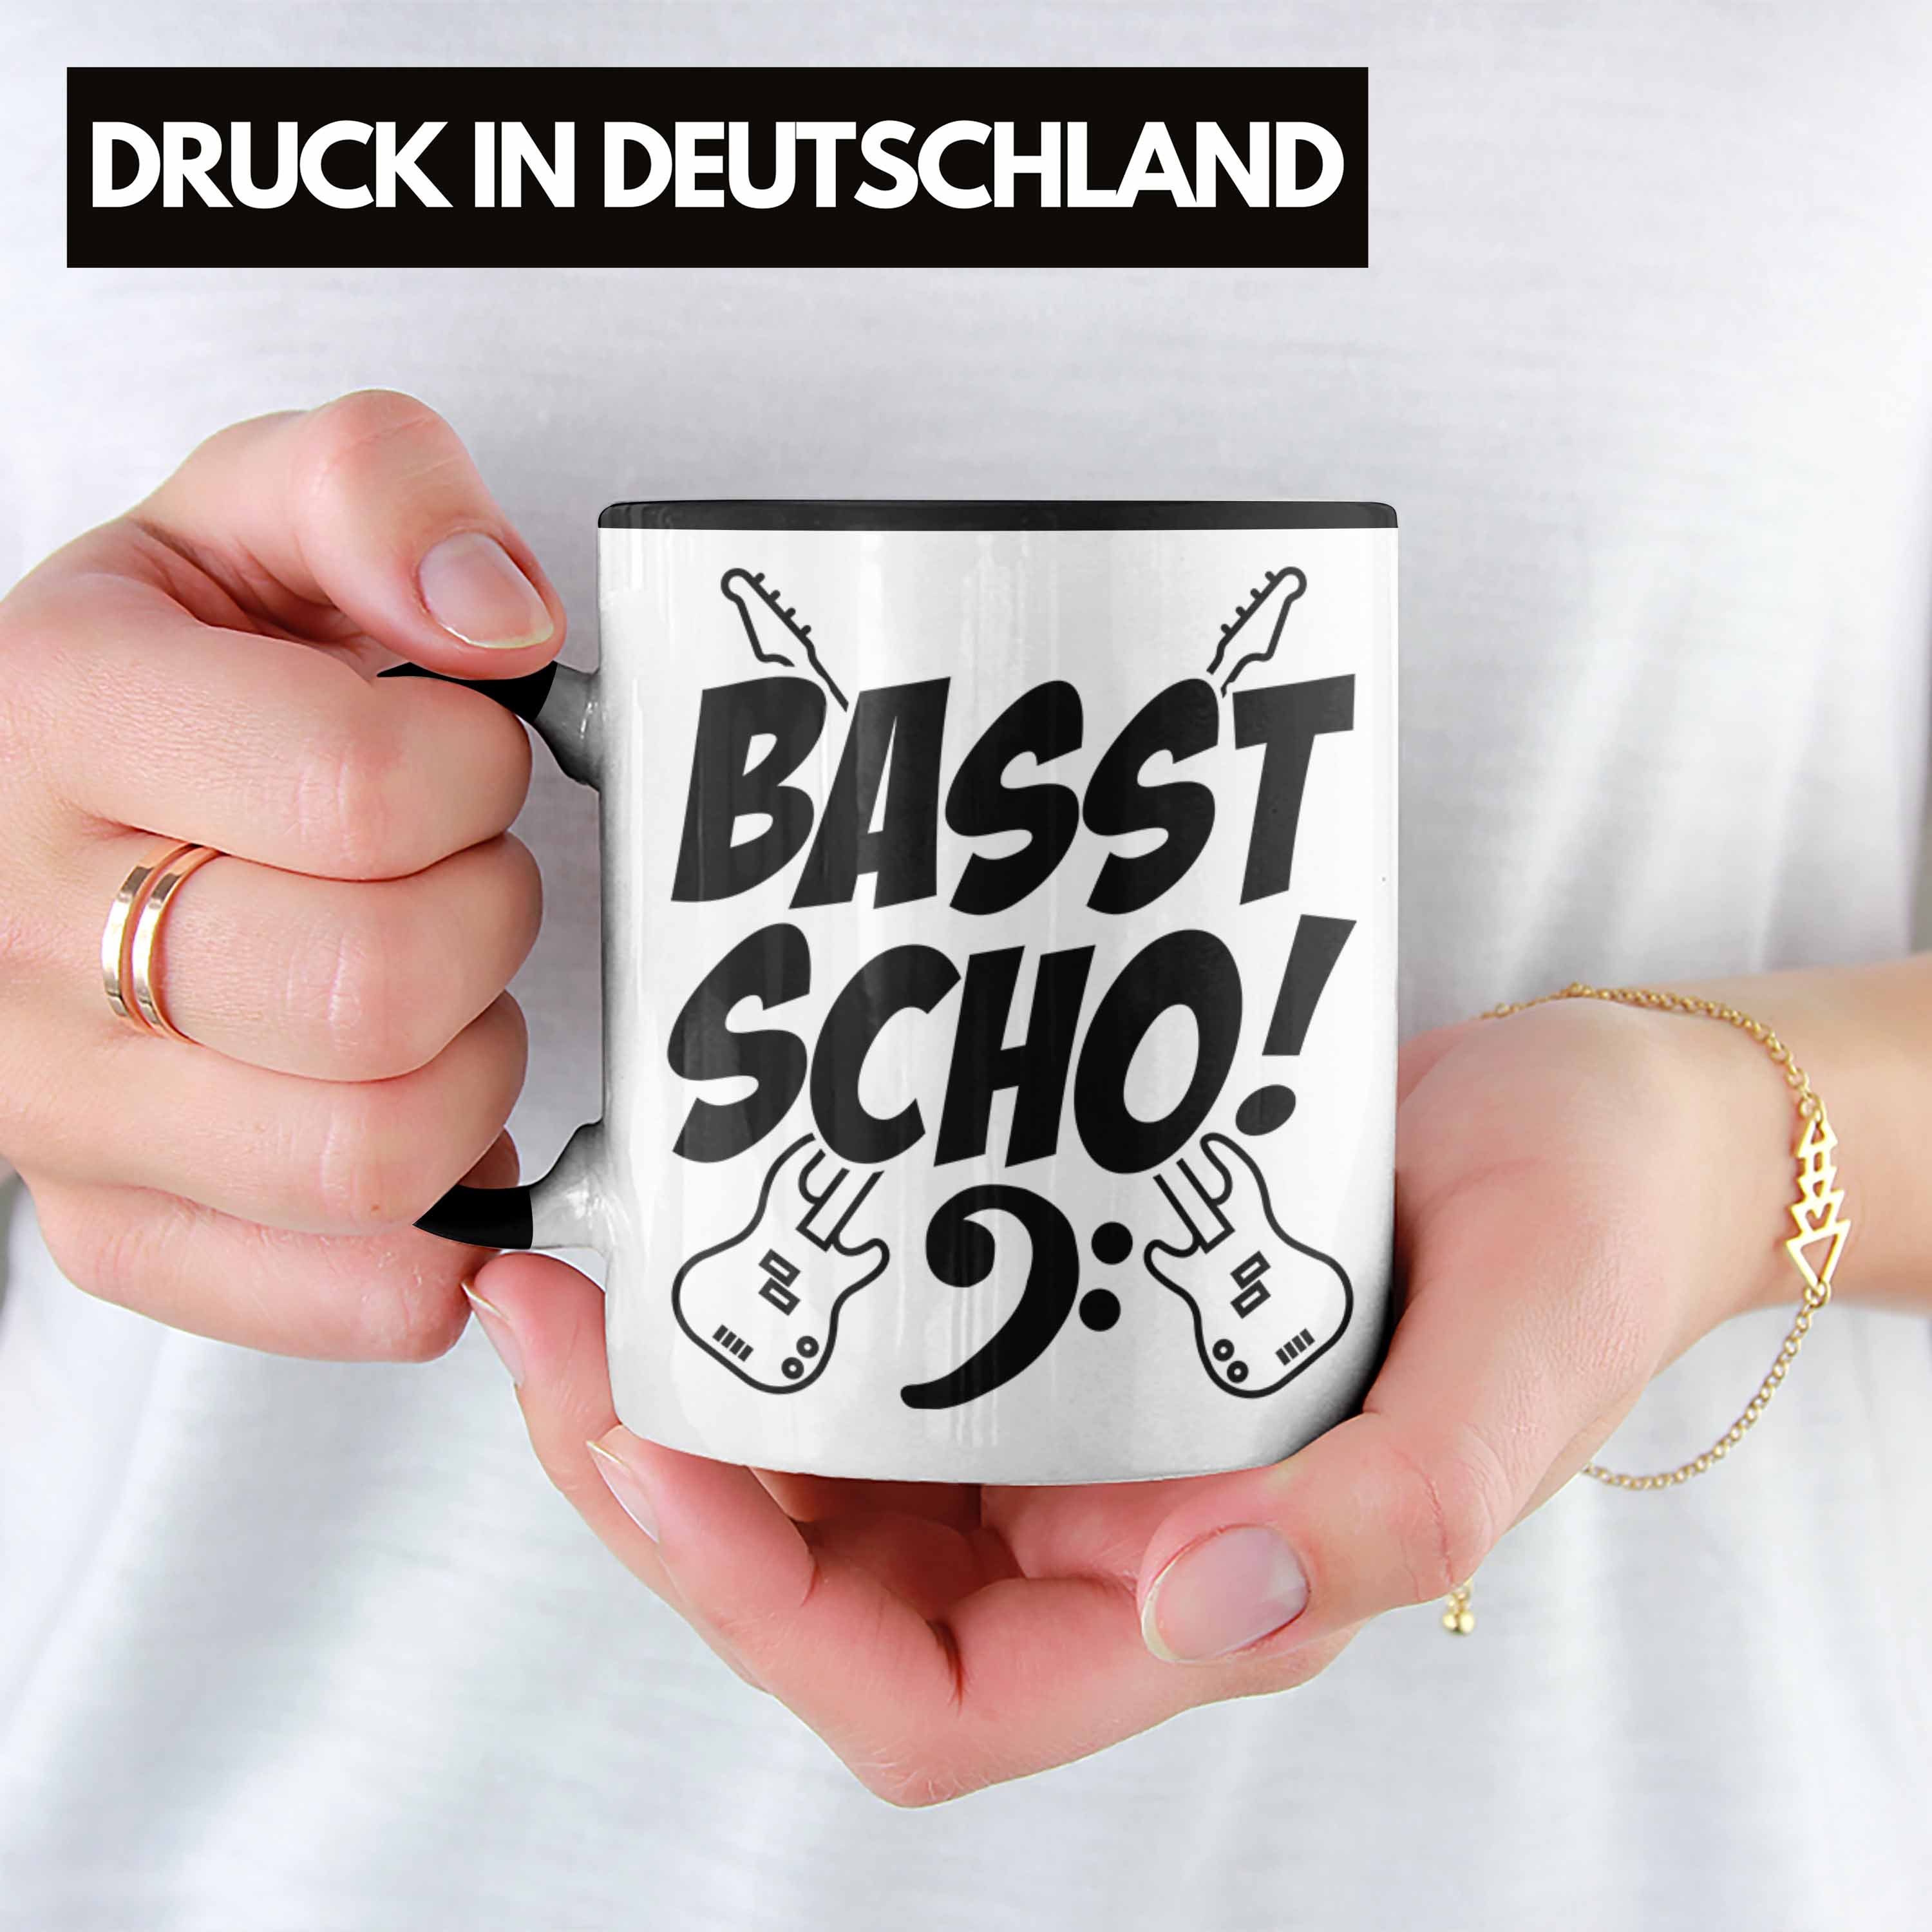 Bassist Tasse S Tasse Basst Geschenkidee Kaffee-Becher Bass-Spieler Trendation Schwarz Geschenk